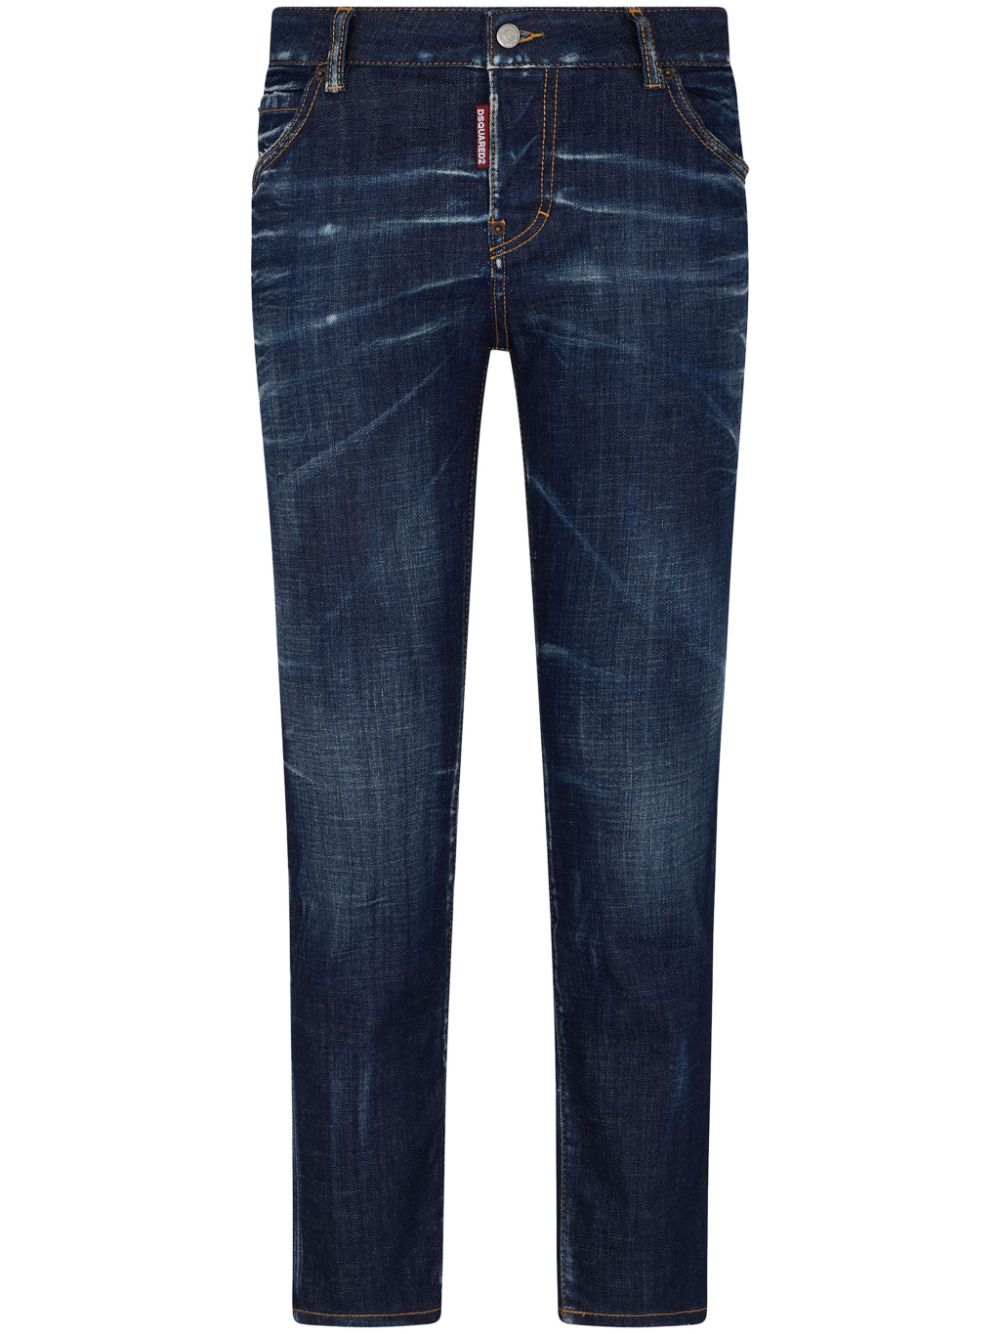 Slim fit whiskering effect jeans<BR/>